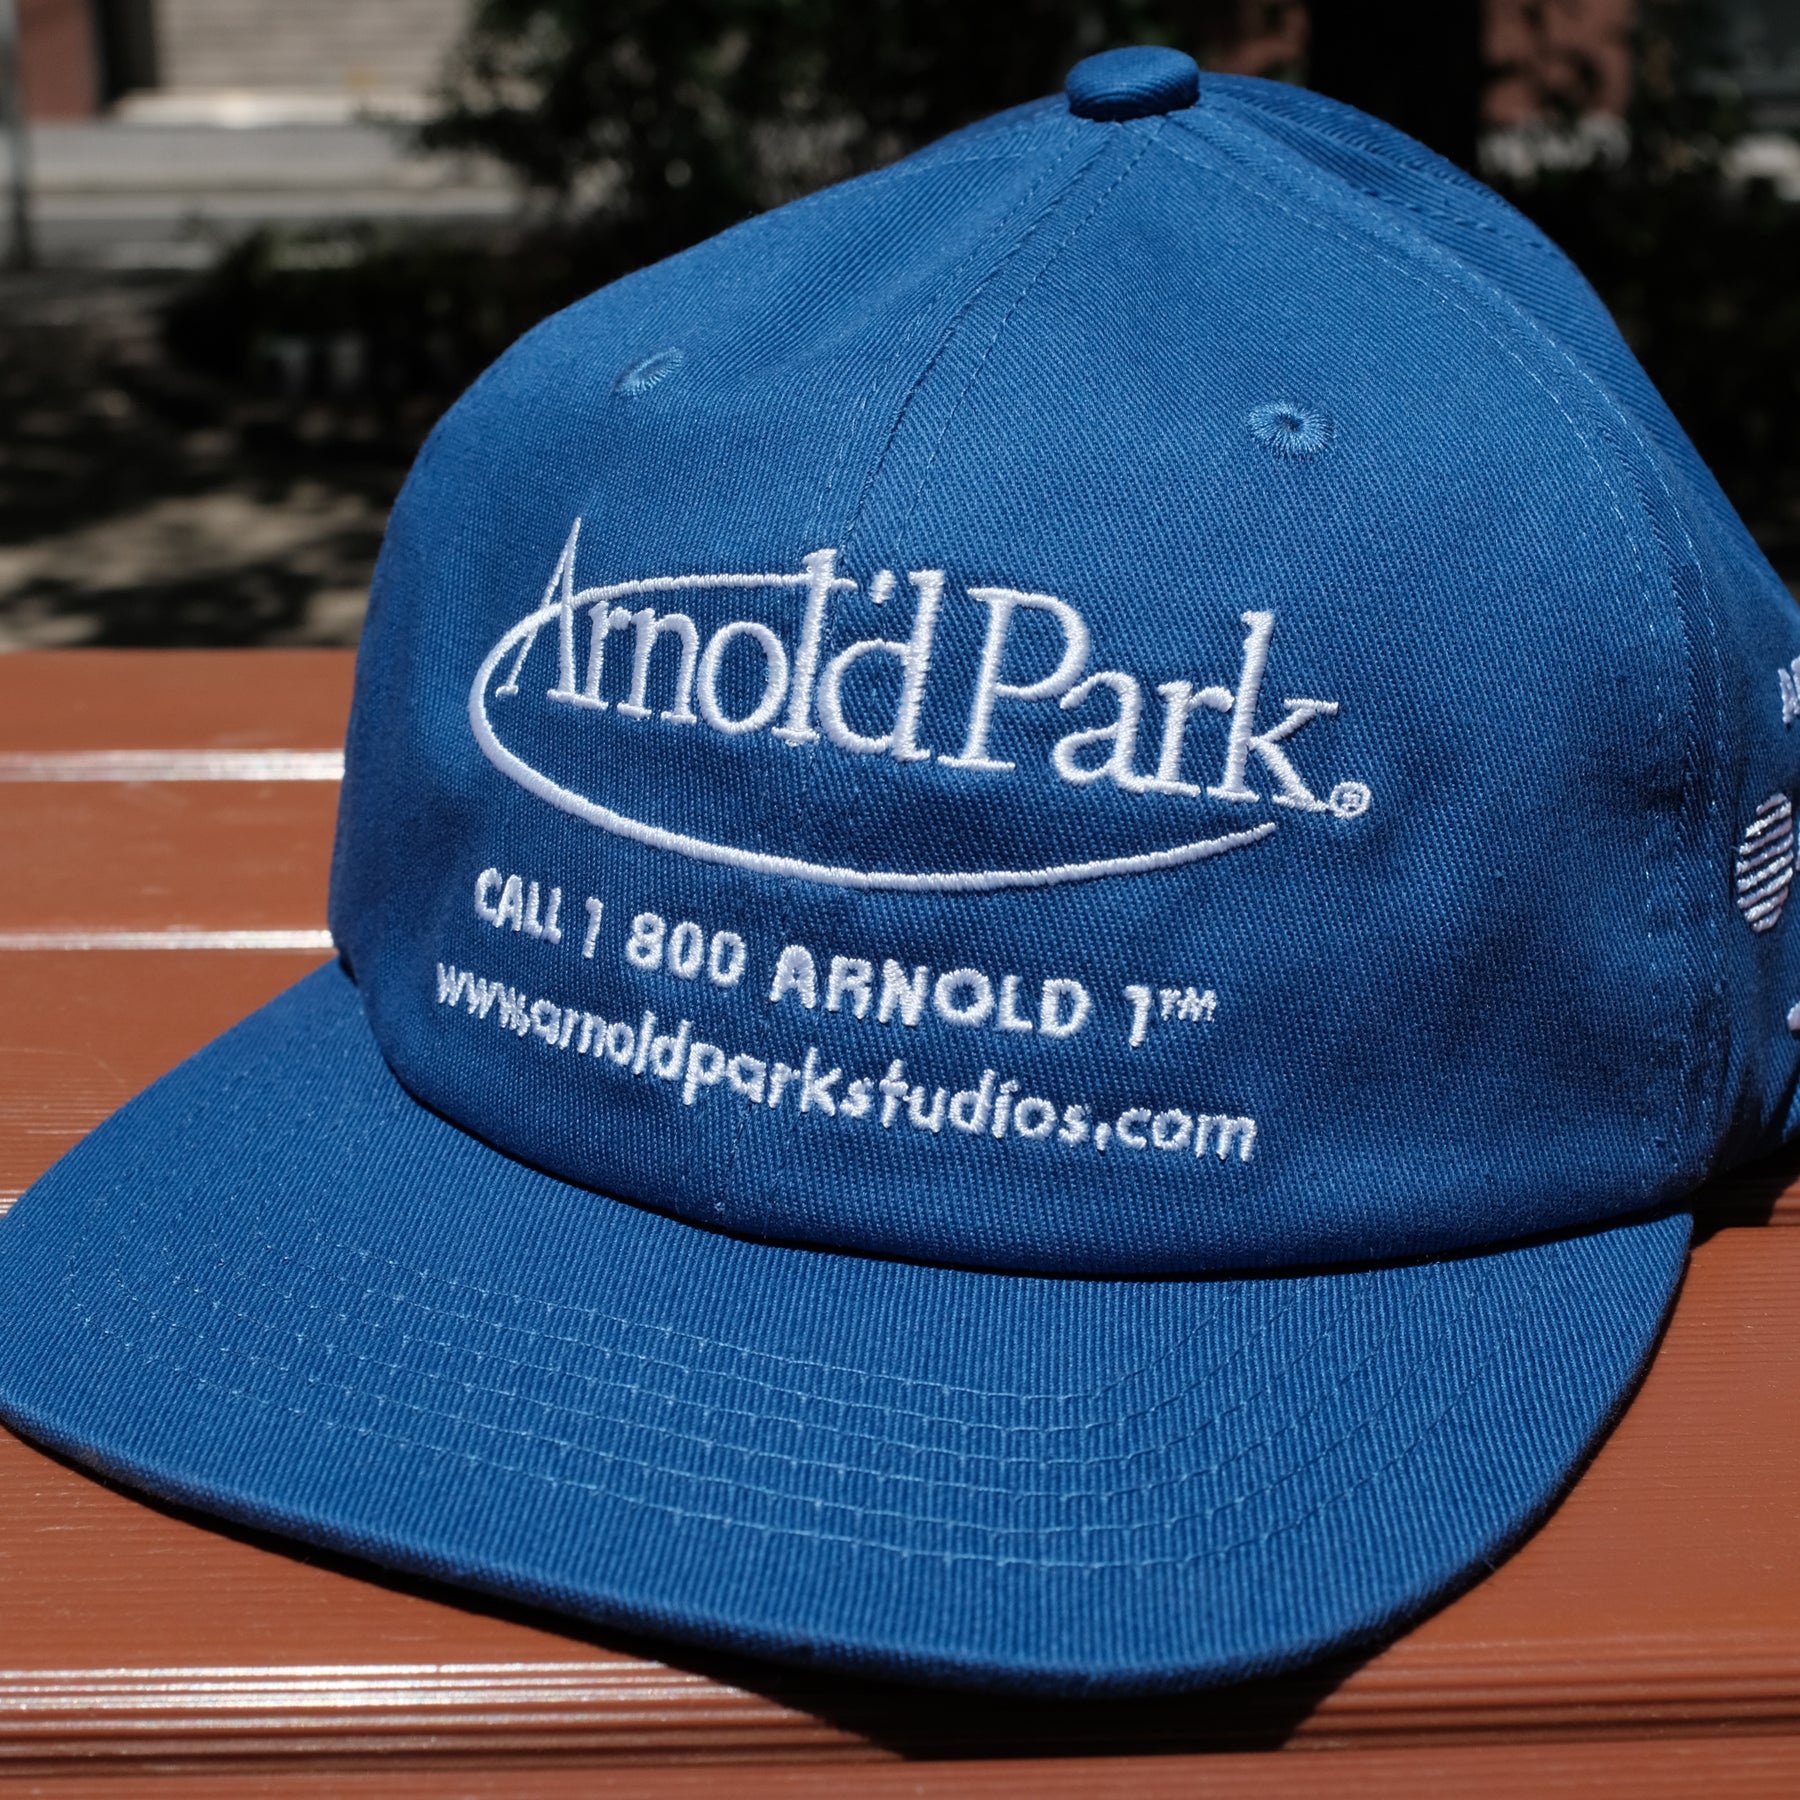 ARNOLD PARK STUDIOS / CELLULAR LOGO CAP COBALT BLUE